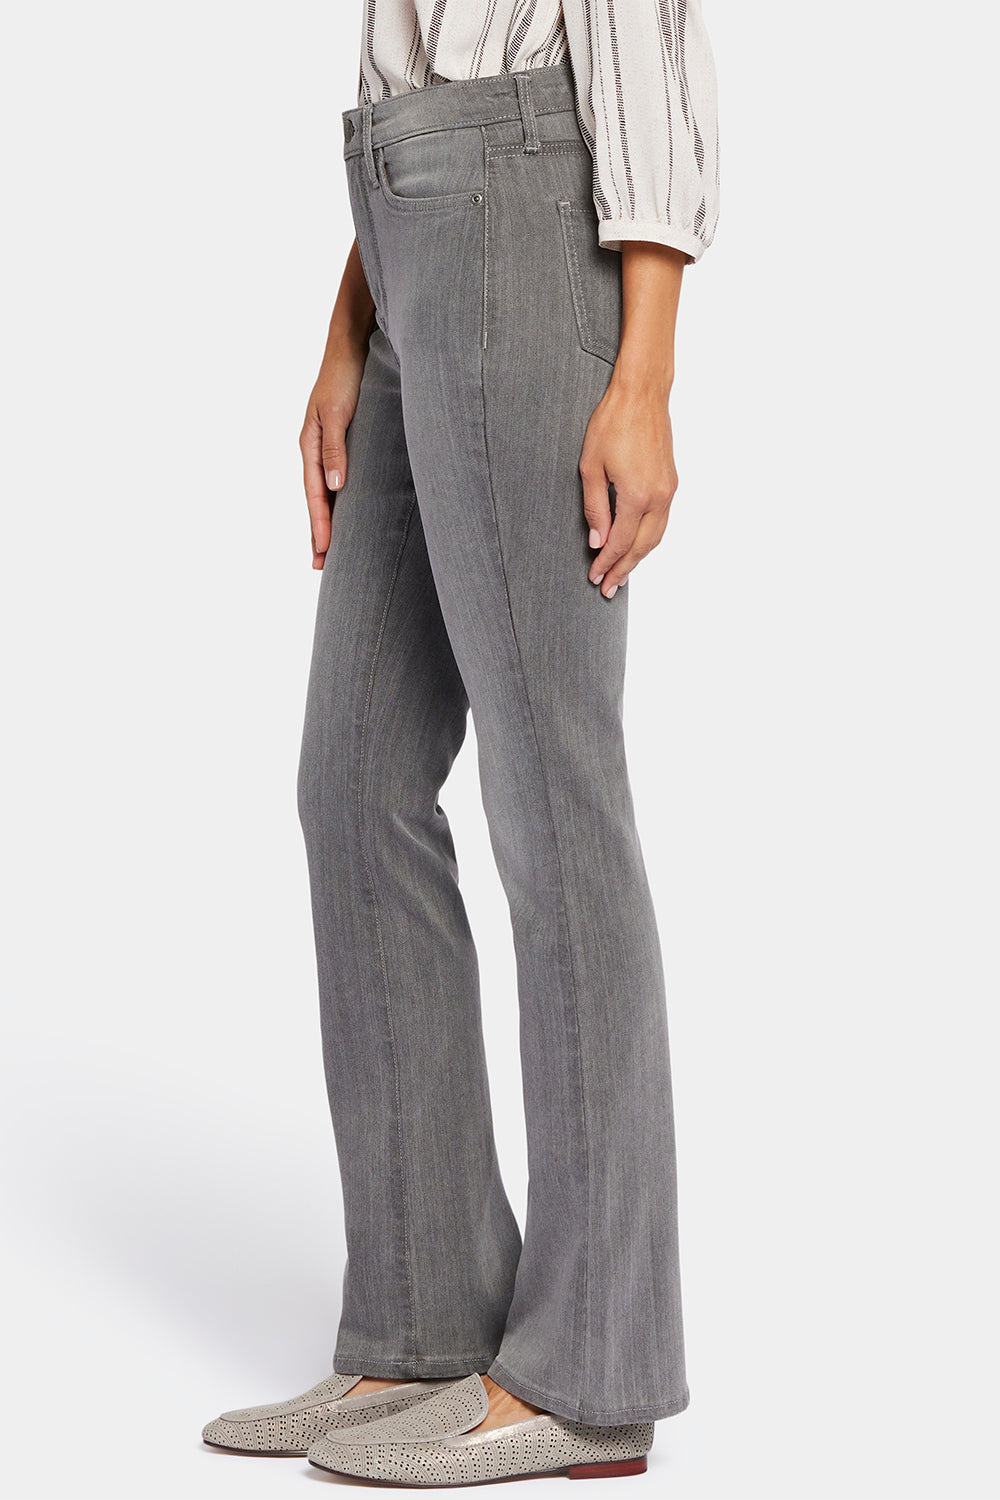 Billie Mini Bootcut Jeans In Sure Stretch® Denim With High Rise - Parade  Grey | NYDJ